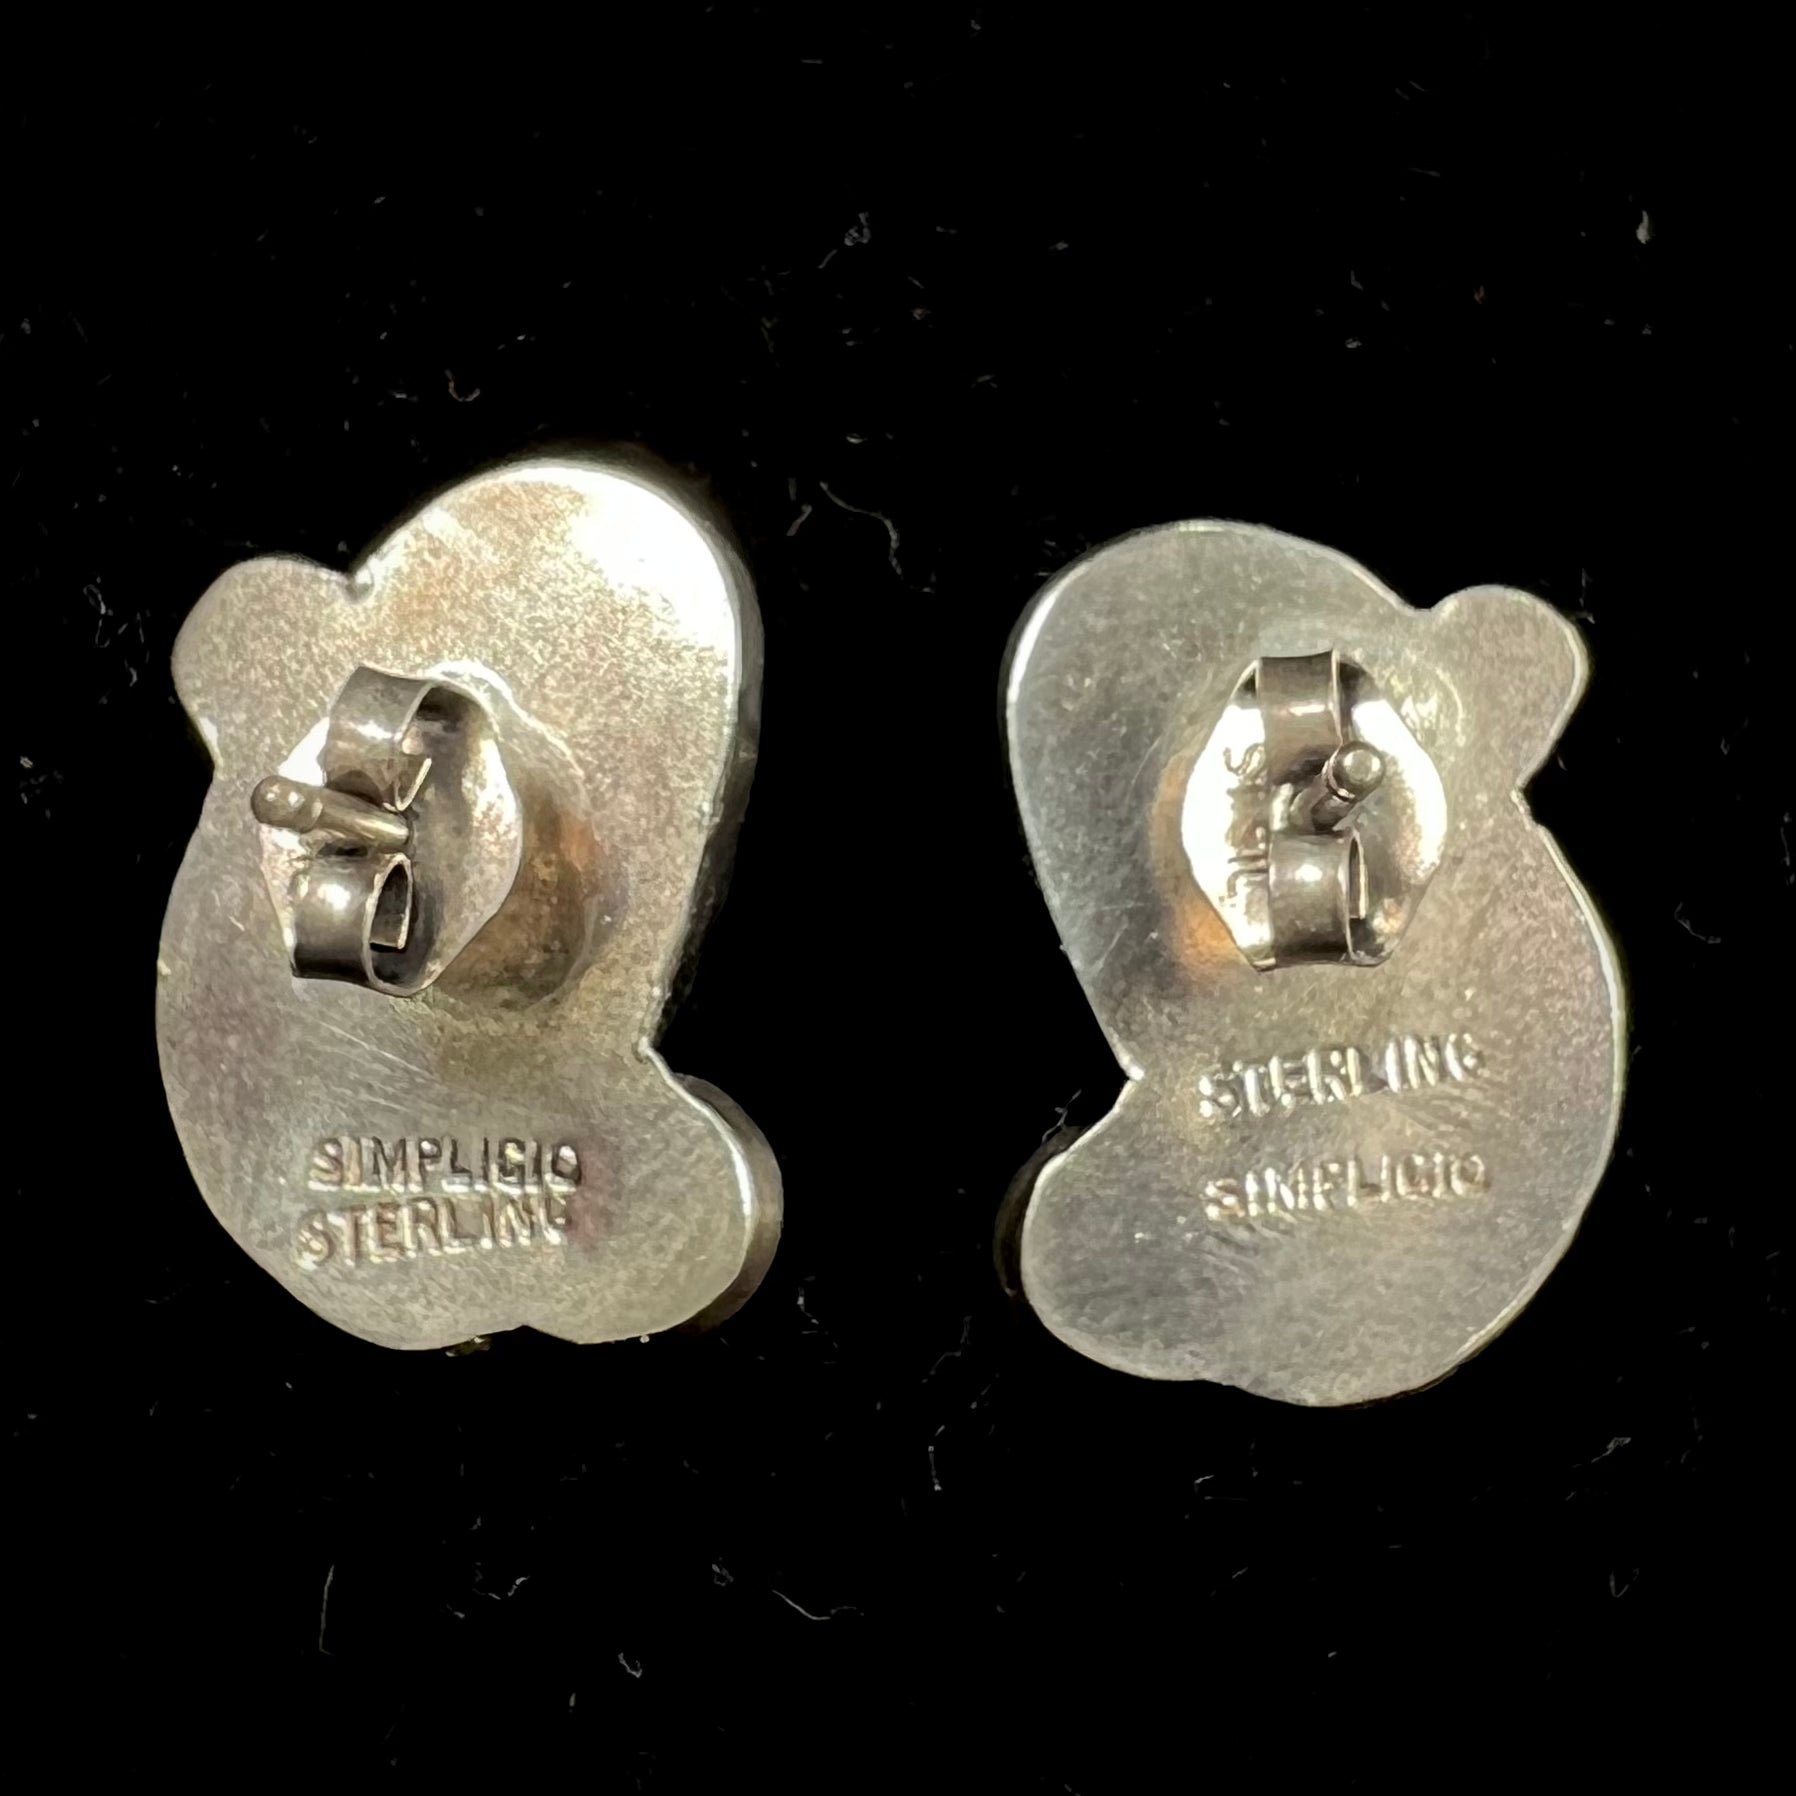 A pair of sterling silver coral earrings handmade by Zuni artists, Carmelita and Dan Simplicio.